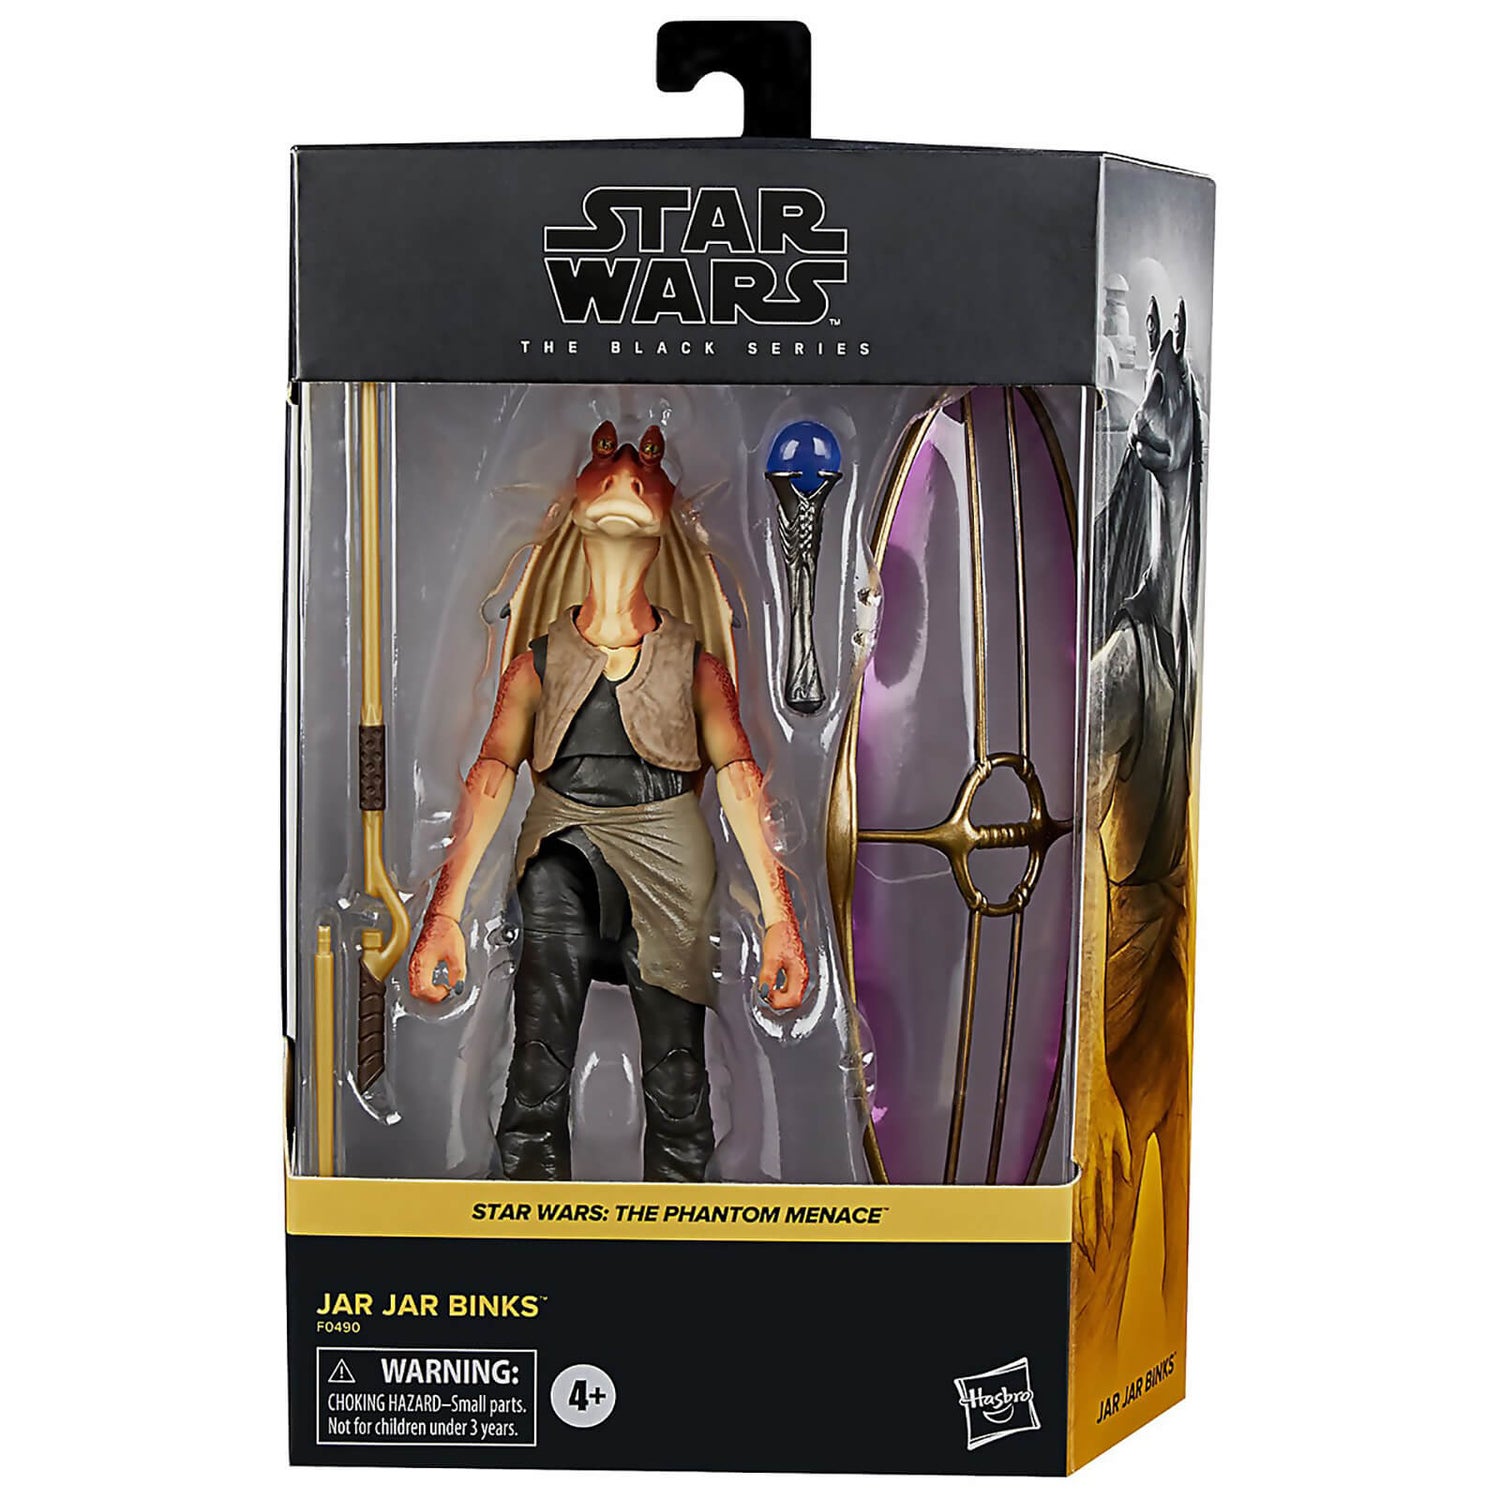 Hasbro Star Wars The Black Series Jar Jar Binks 6-Inch-Scale Star Wars: The Phantom Menace Collectible Deluxe Action Figure